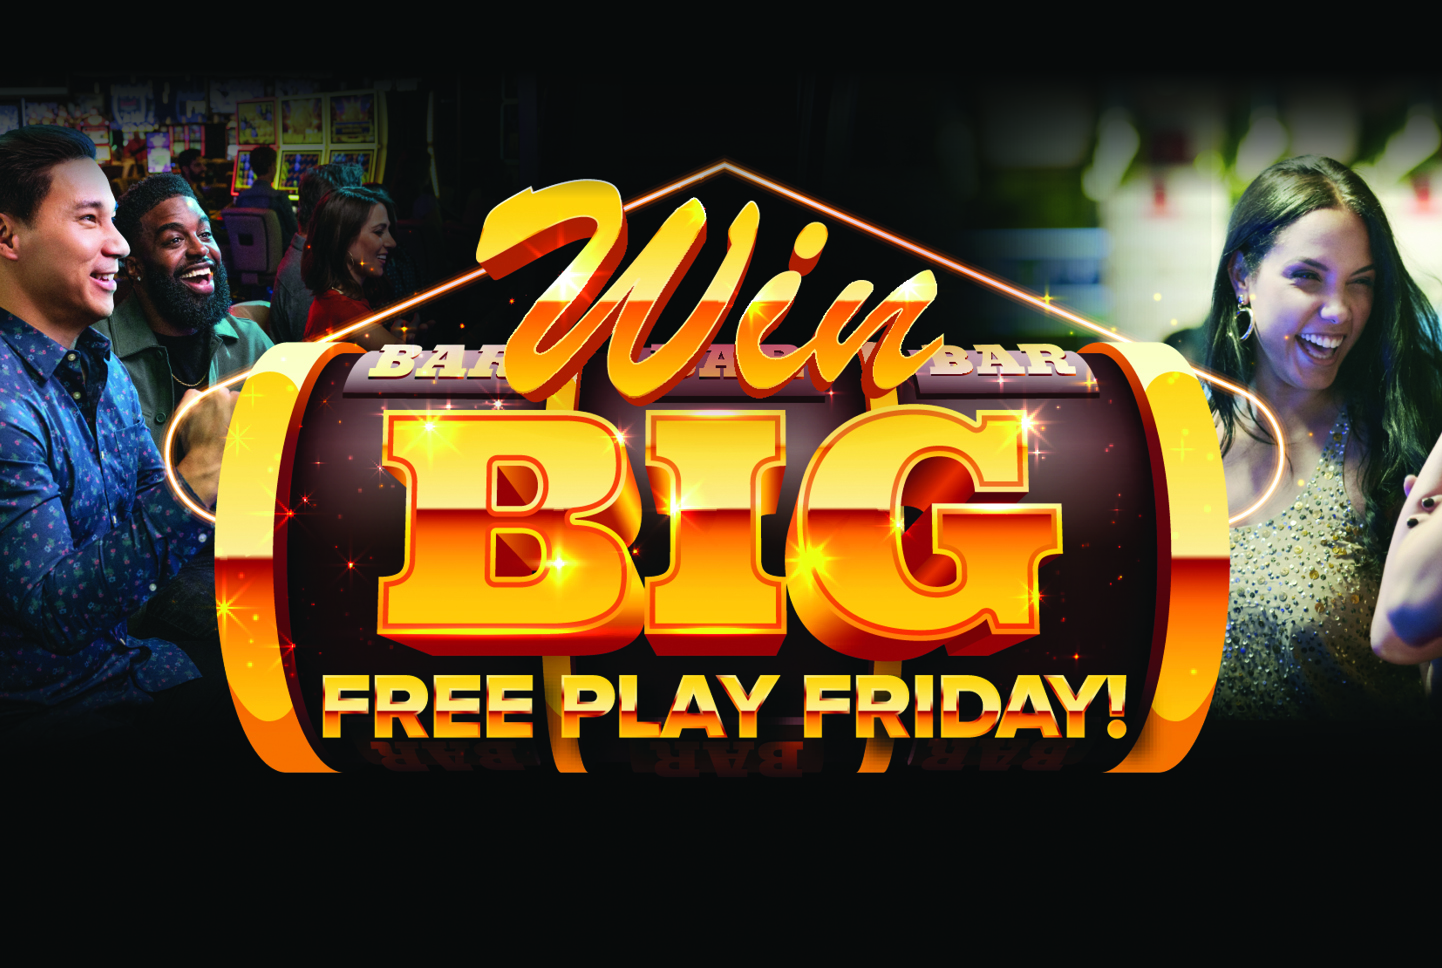 Free Play Fridays